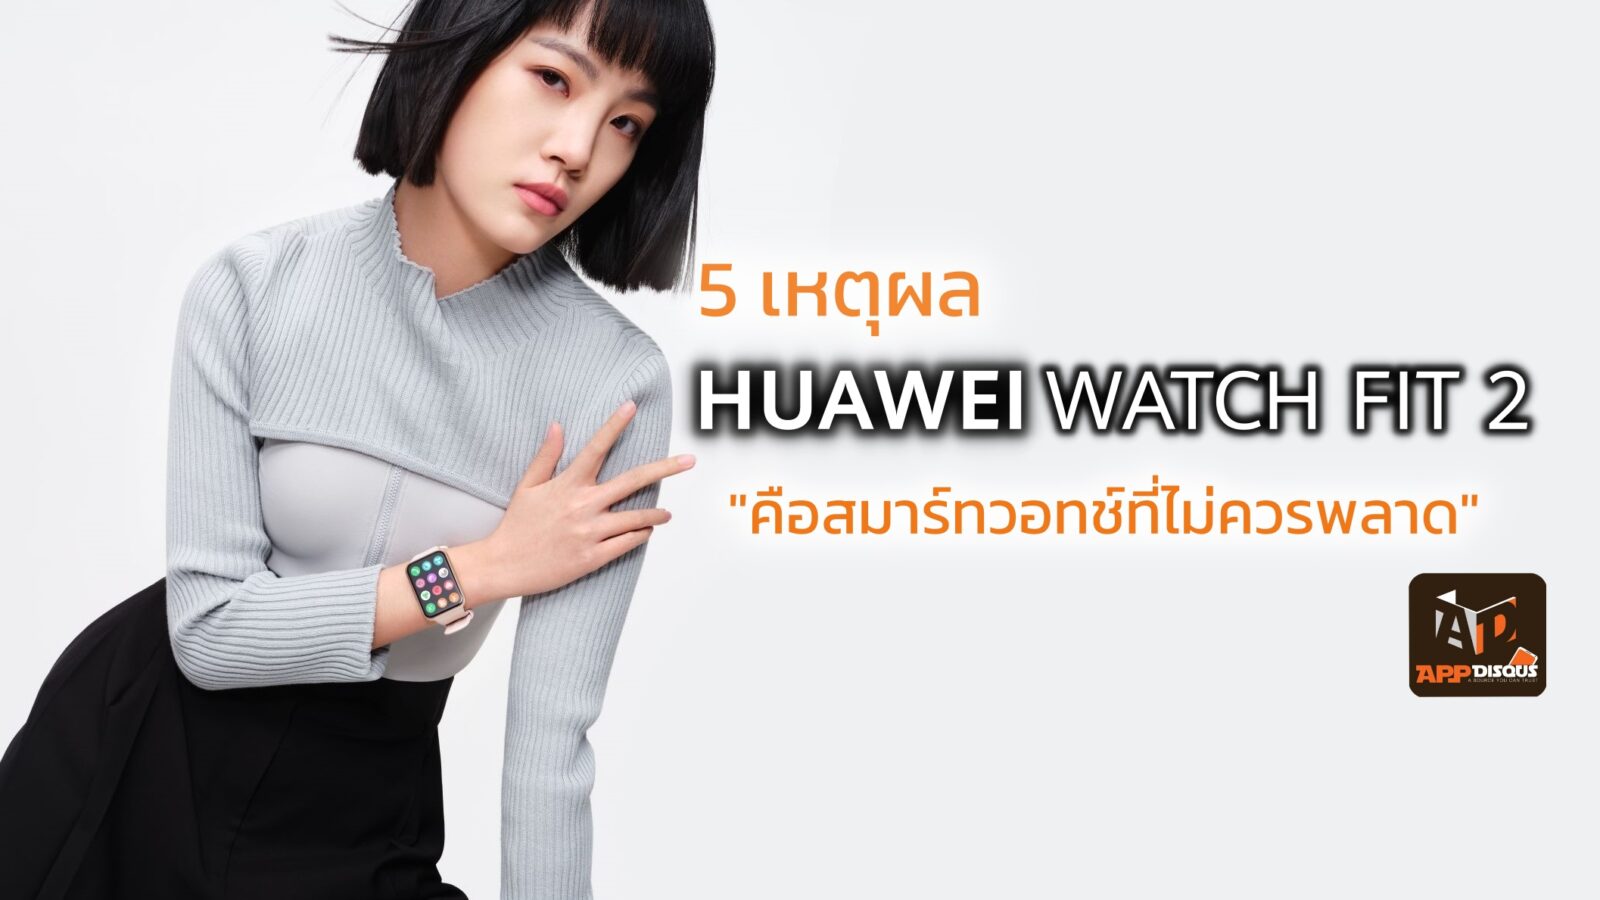 HUAWEI-WATCH-FIT-2-2